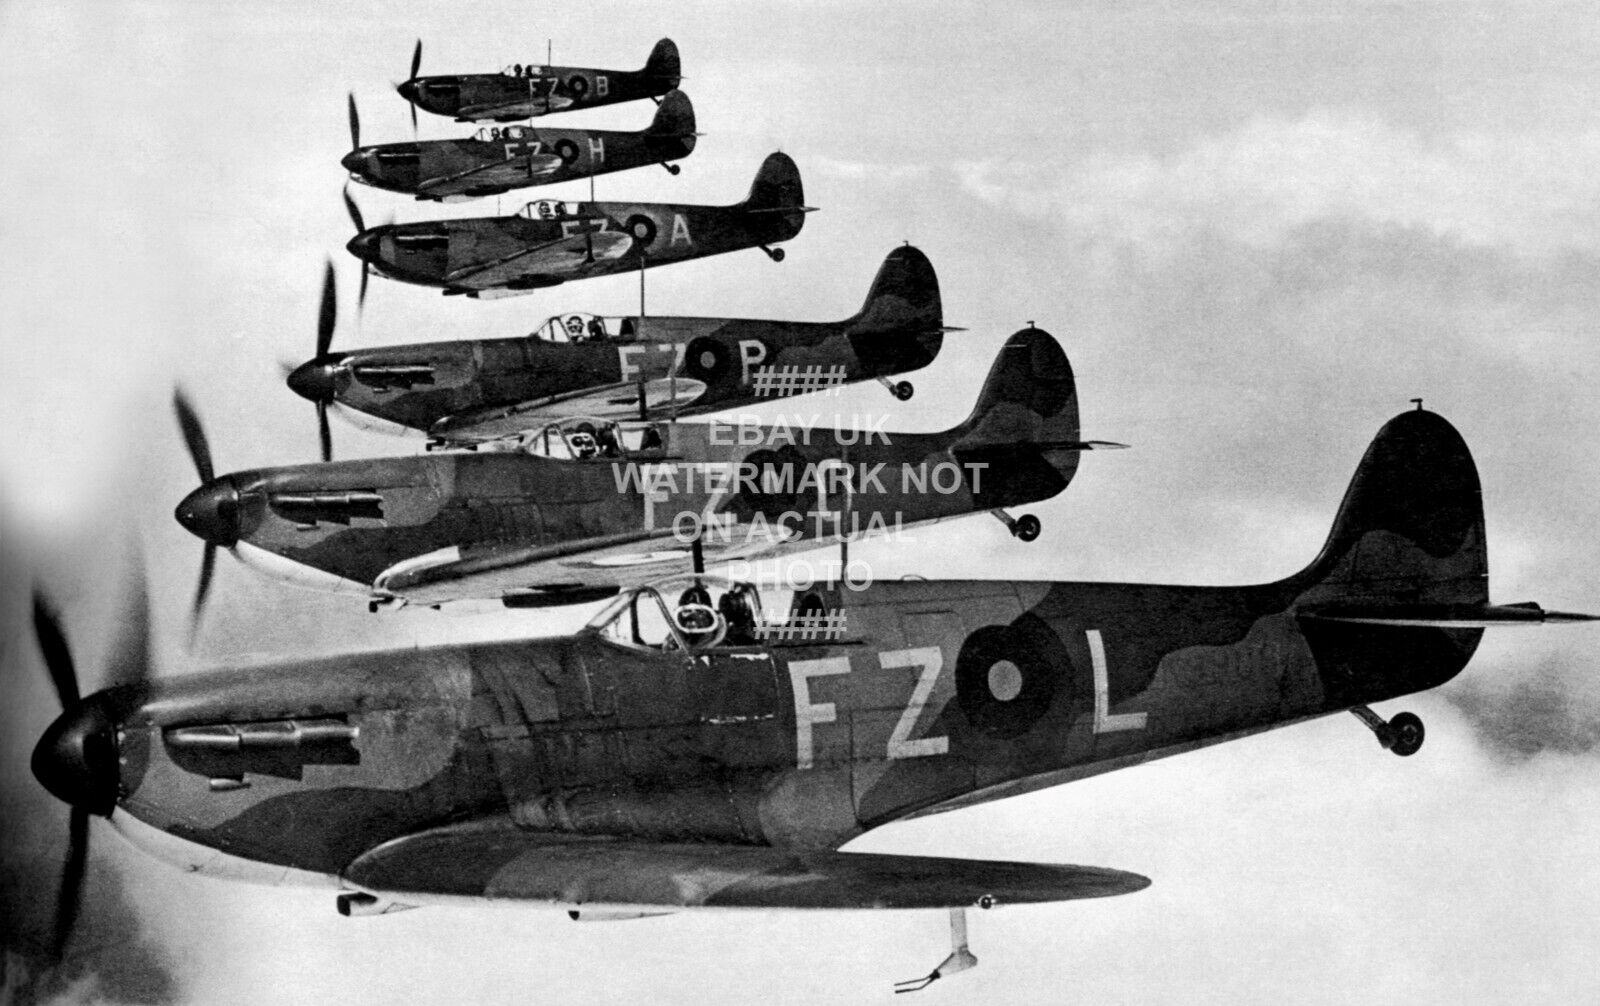 RAF SUPERMARINE SPITFIRE 1939 PHOTO PRINT WORLD WAR TWO 2 WW2 AVIATION RAF